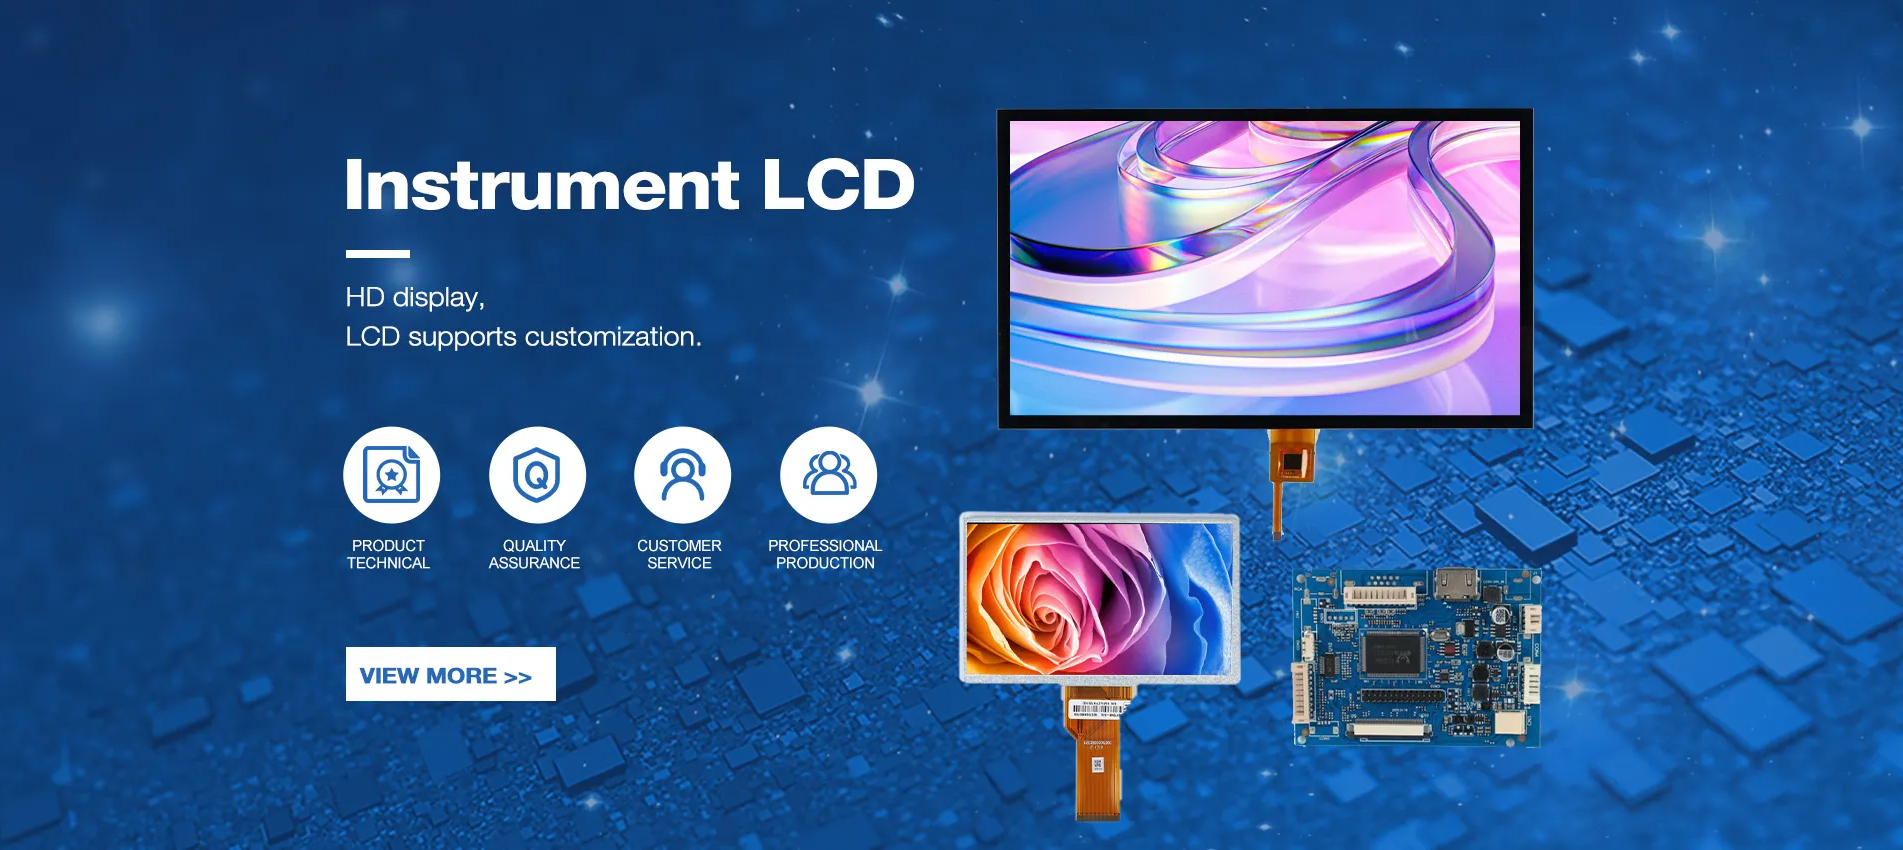 Instrument LCD display